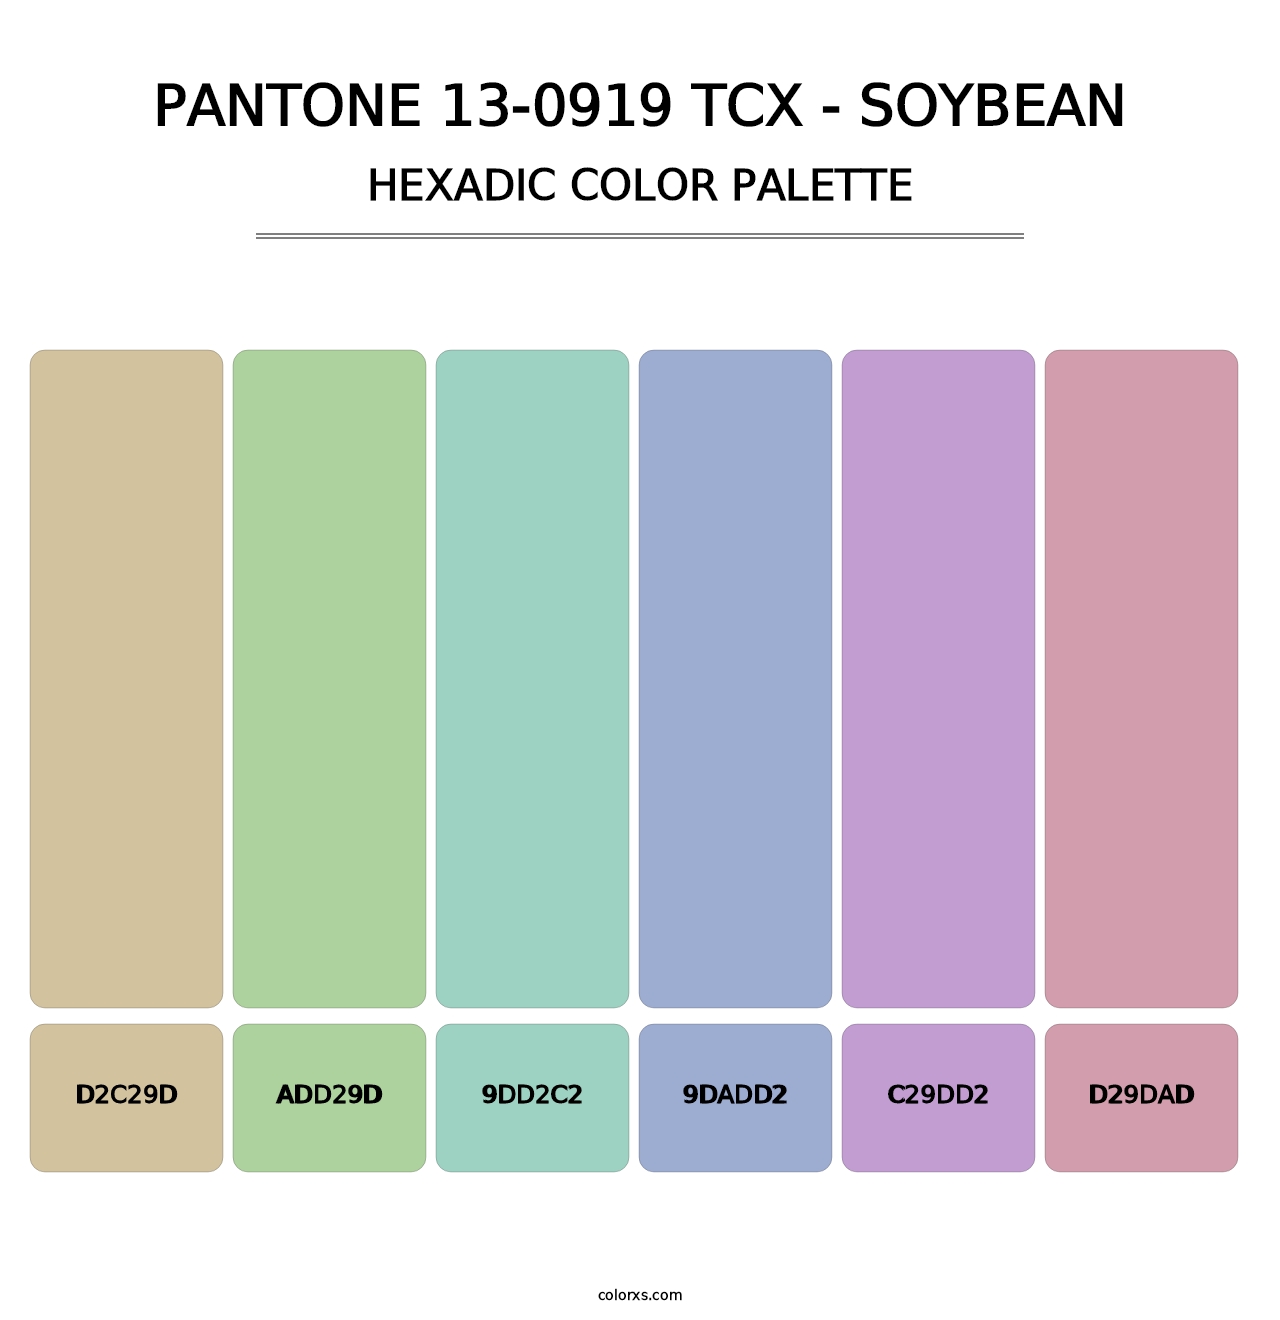 PANTONE 13-0919 TCX - Soybean - Hexadic Color Palette